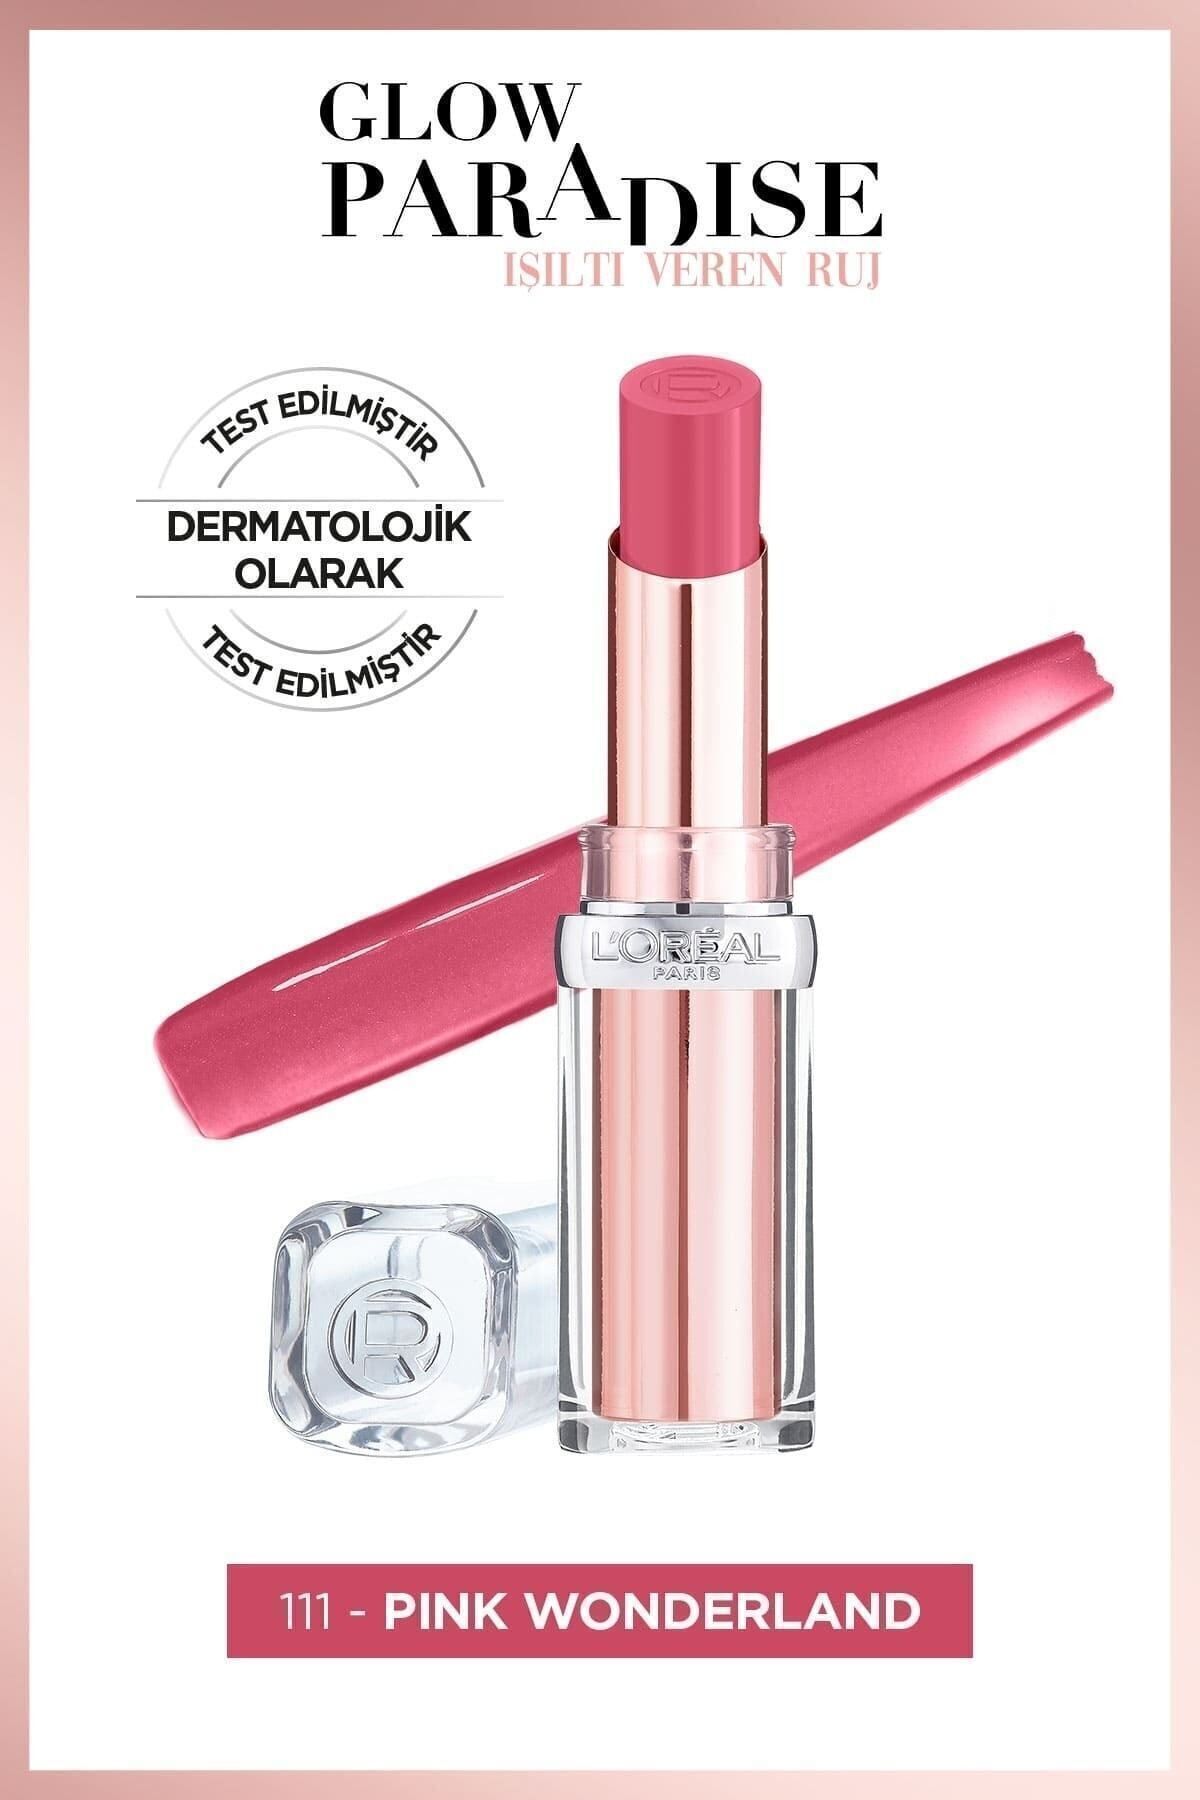 L'Oreal Paris L'oréal Paris Glow Paradise Balm-in-lipstick - Işıltı Veren Ruj 111 Pink Wonderland